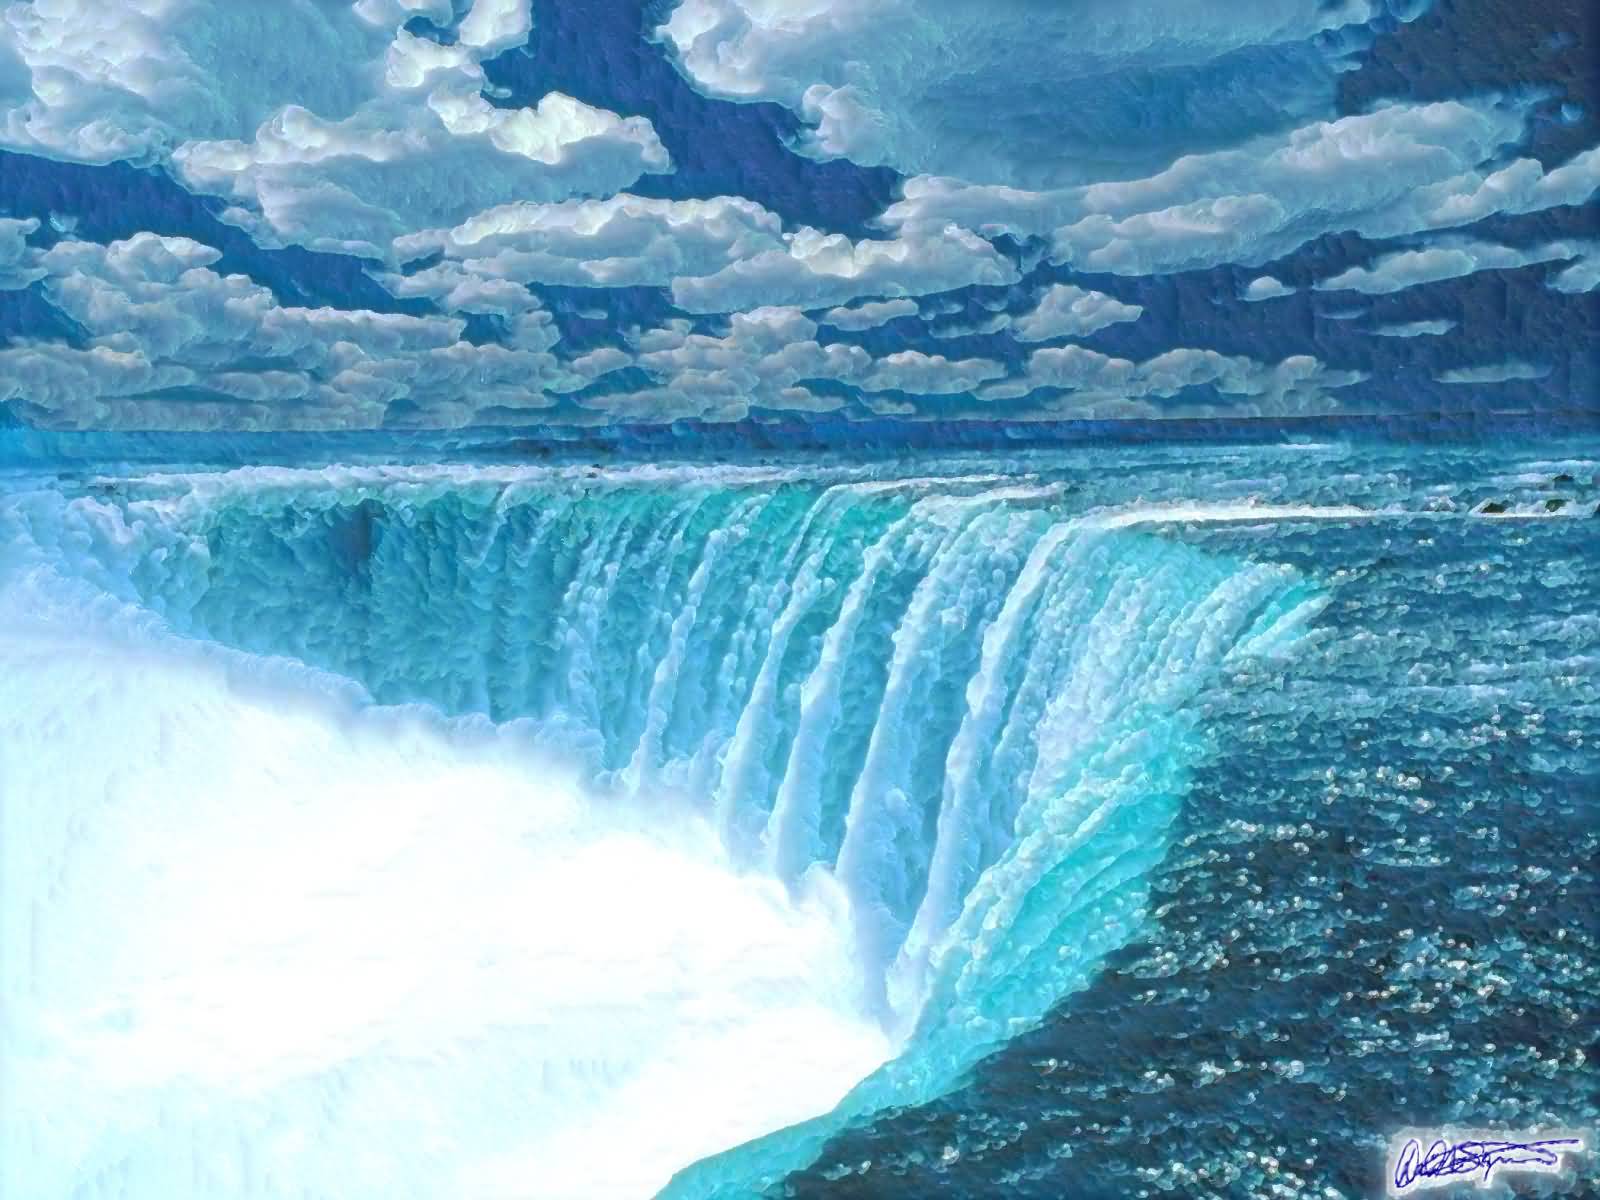 Turquoise Water Of Niagara Falls